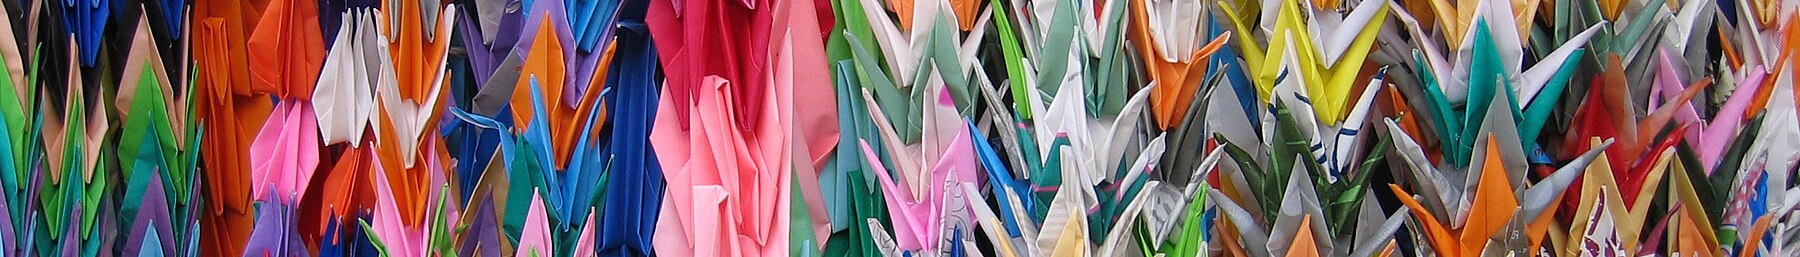 Hiroshima banner Origami cranes.jpg